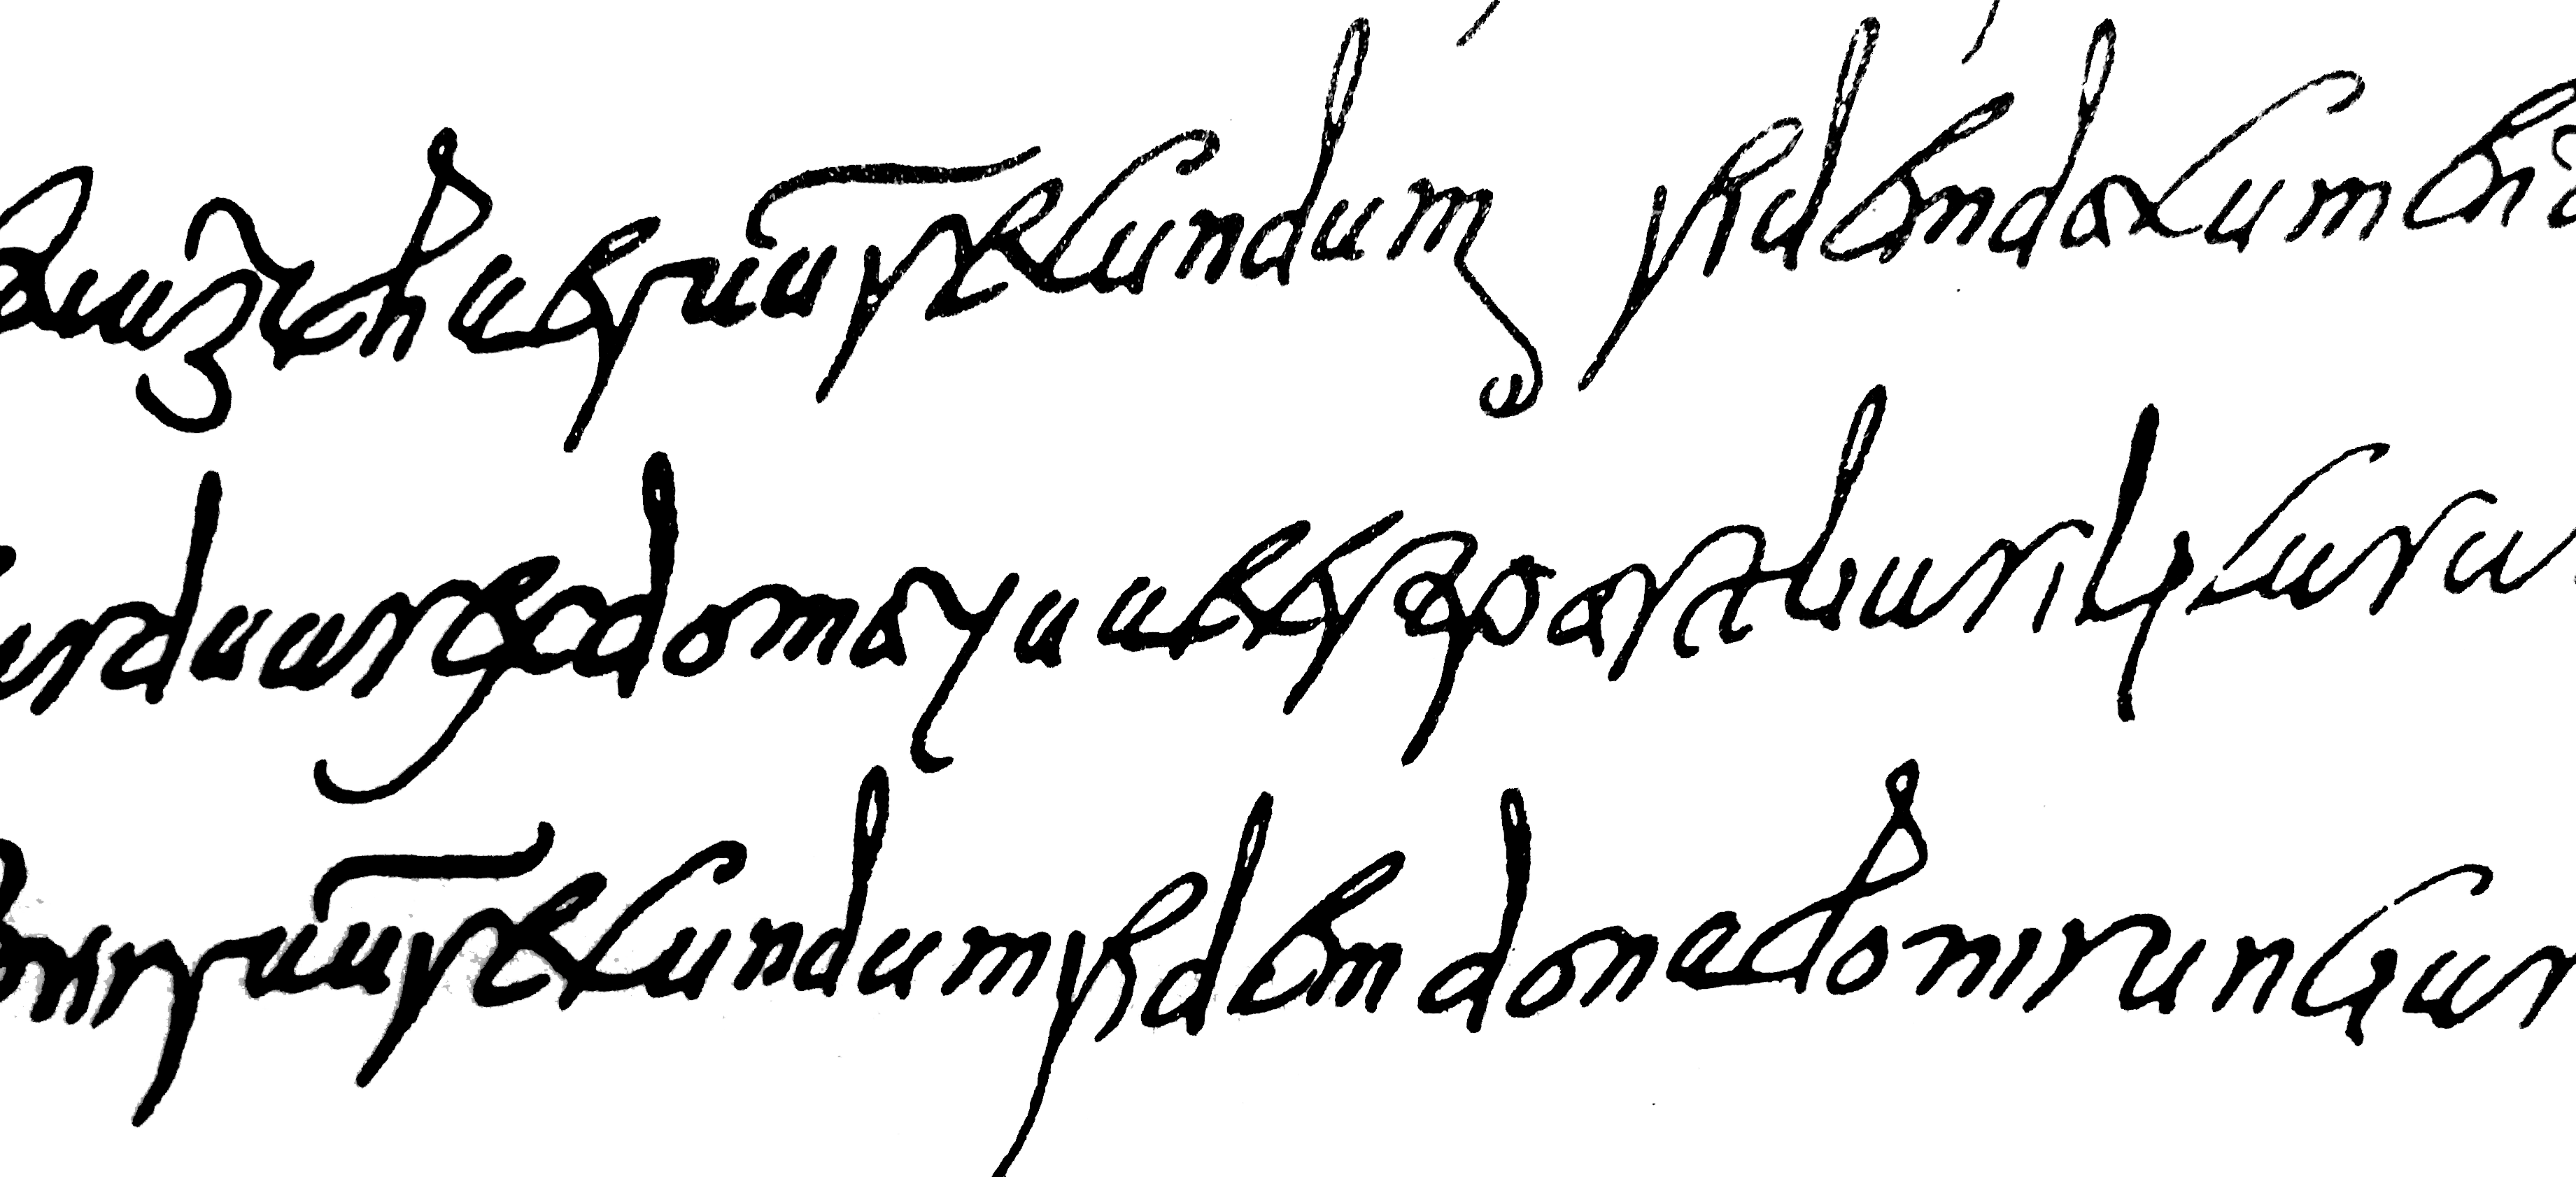 Roman handwriting from the 6th century